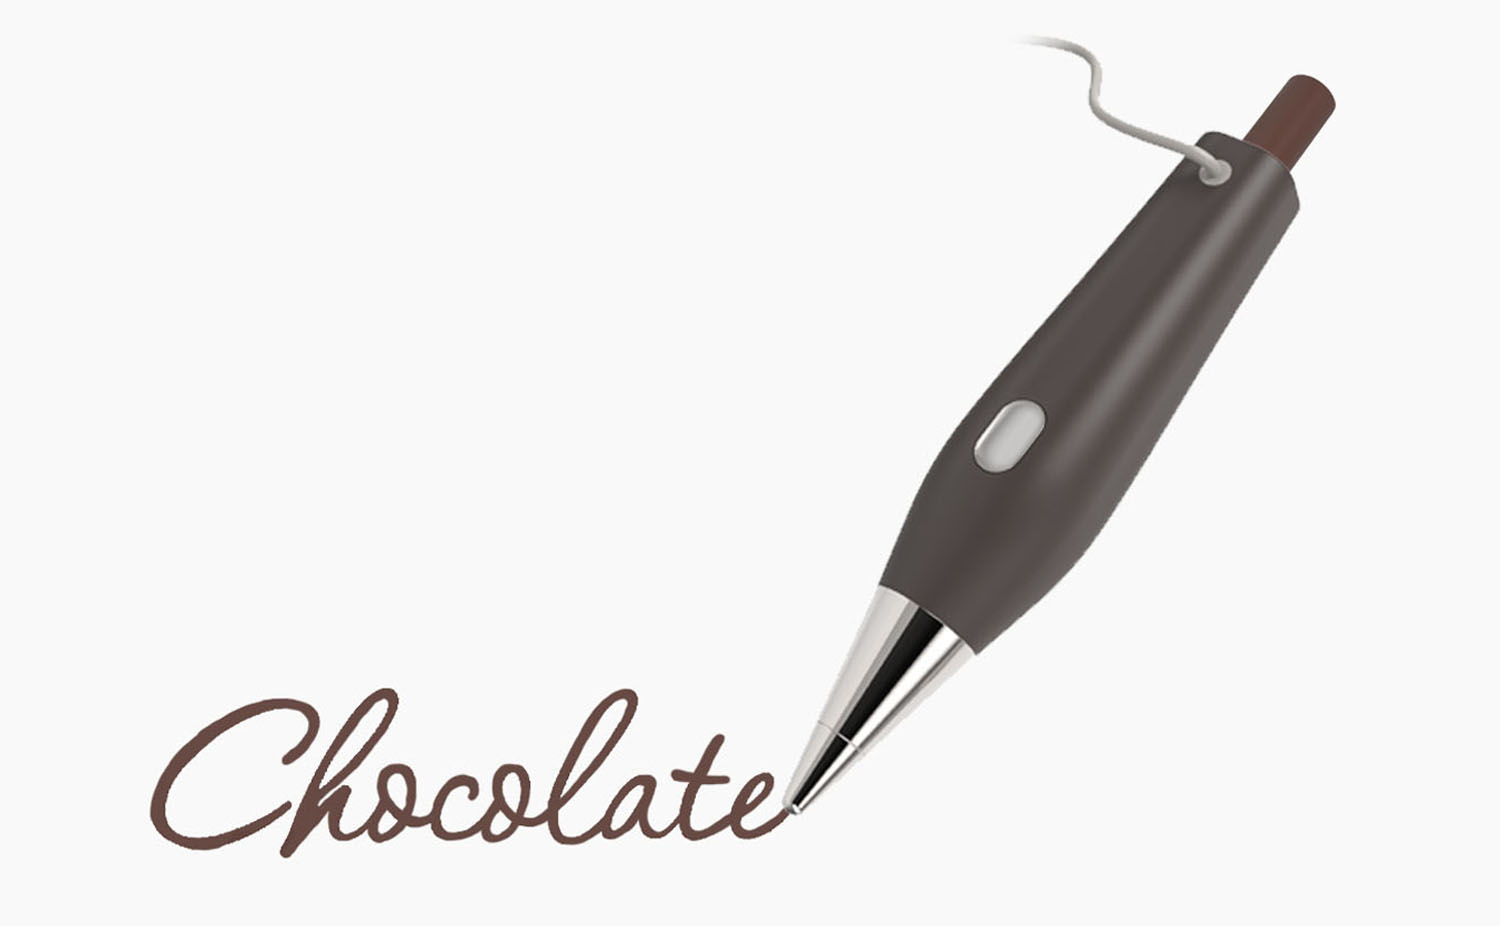 Chocolate 3D Printing Pen: Main image